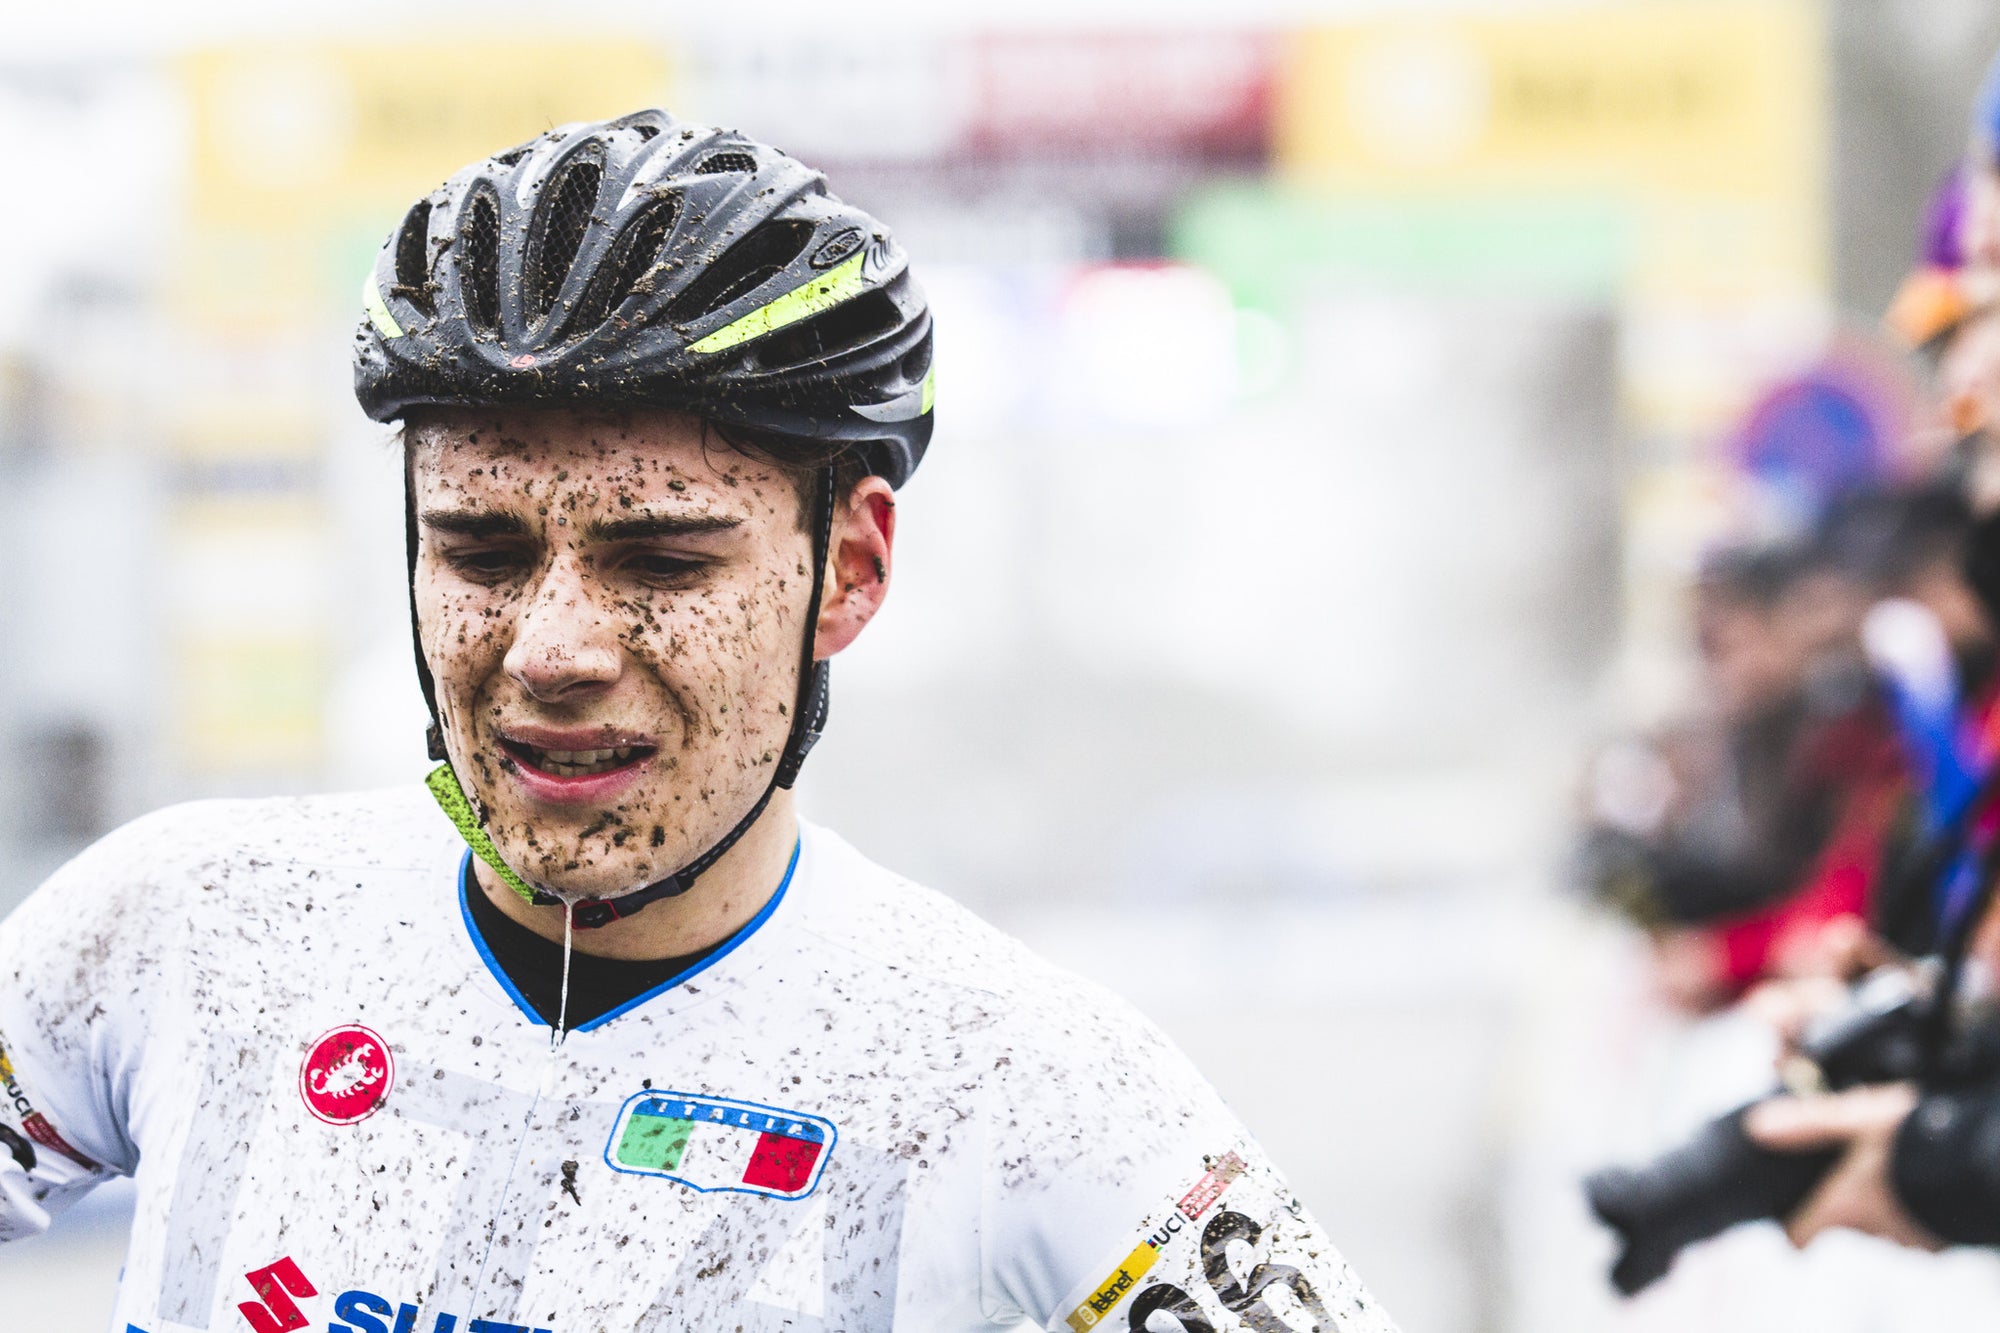 Dan Monaghan - UCI Cyclo-cross World Cup, Namur